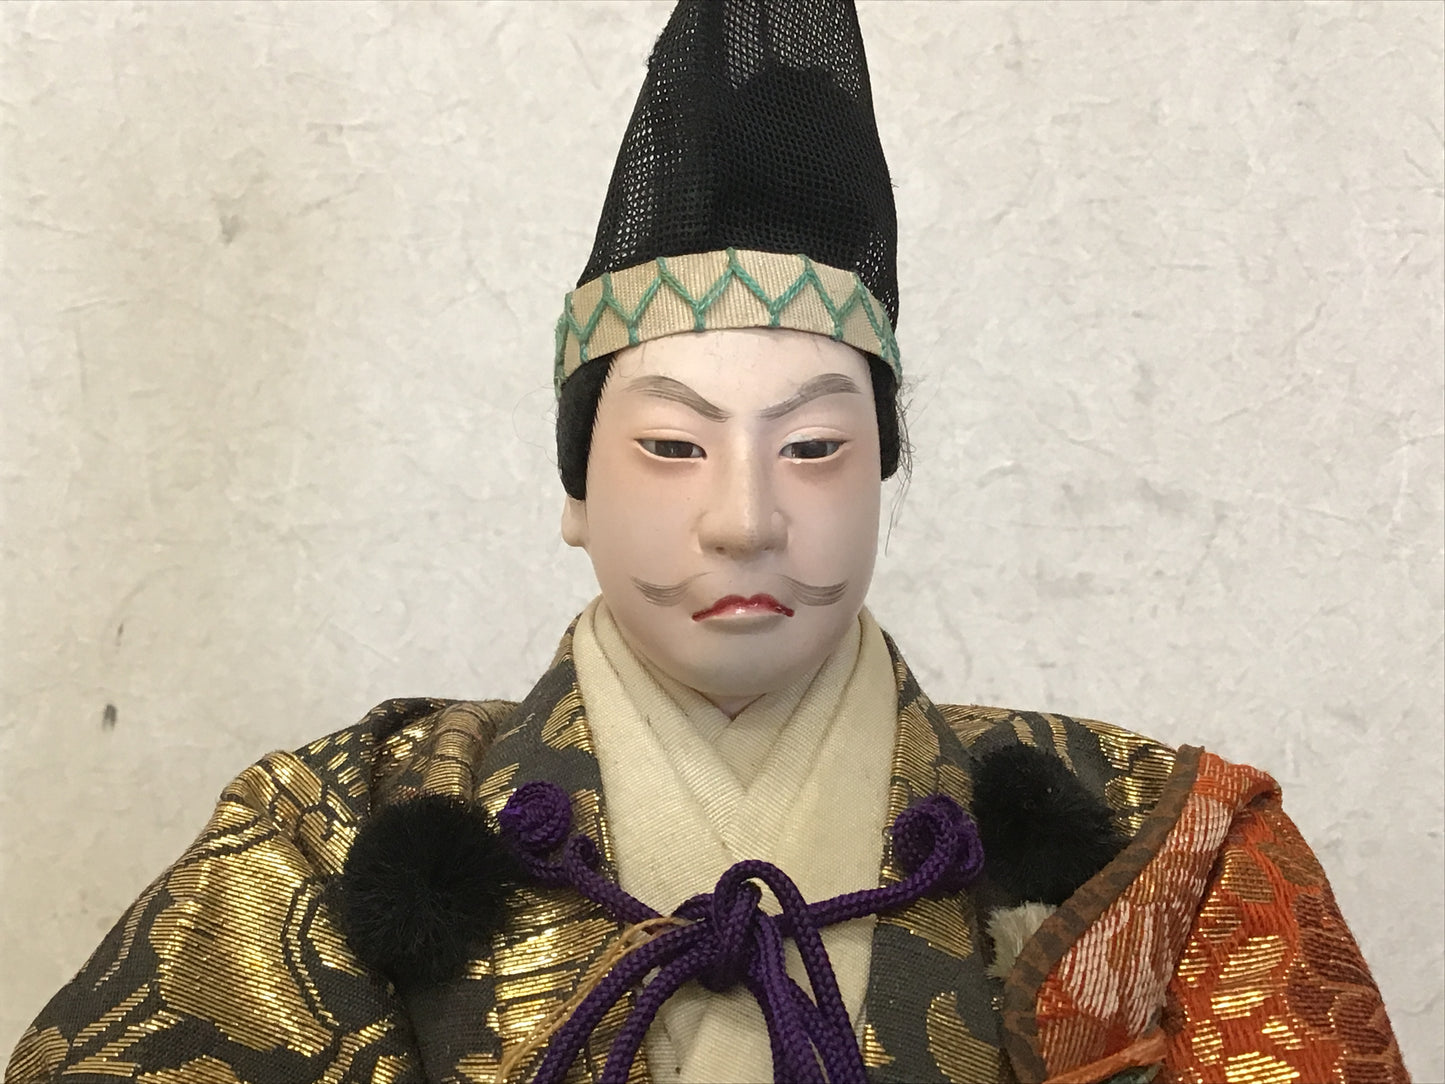 Y2478 NINGYO Boys' May Festival doll Samurai box Japanese vintage antique Japan